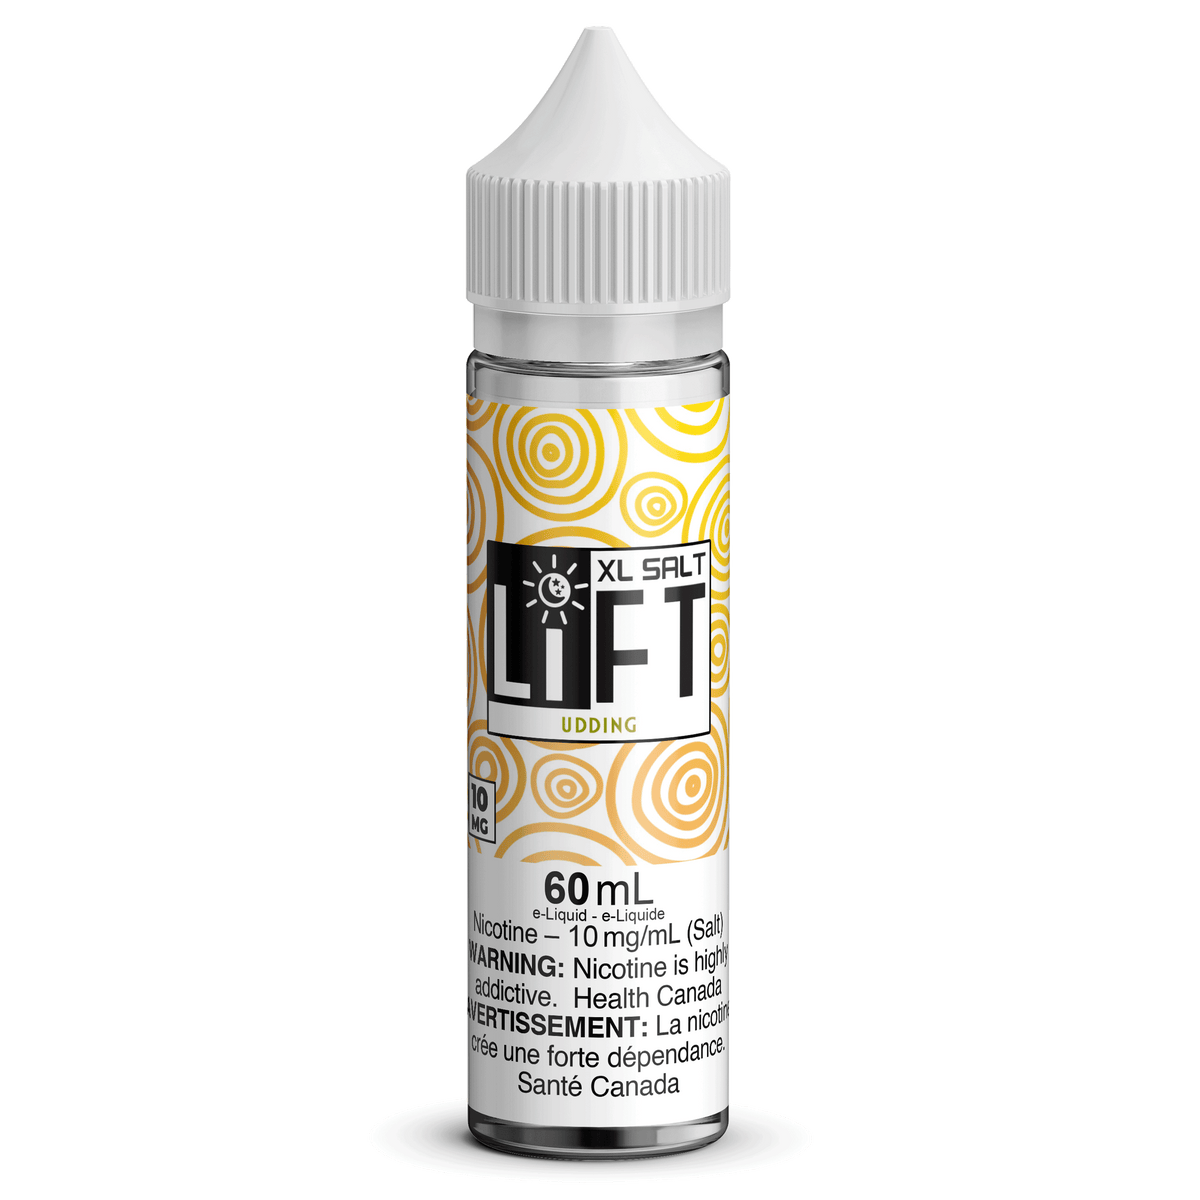 LIFT XL SALT - Udding available on Canada online vape shop